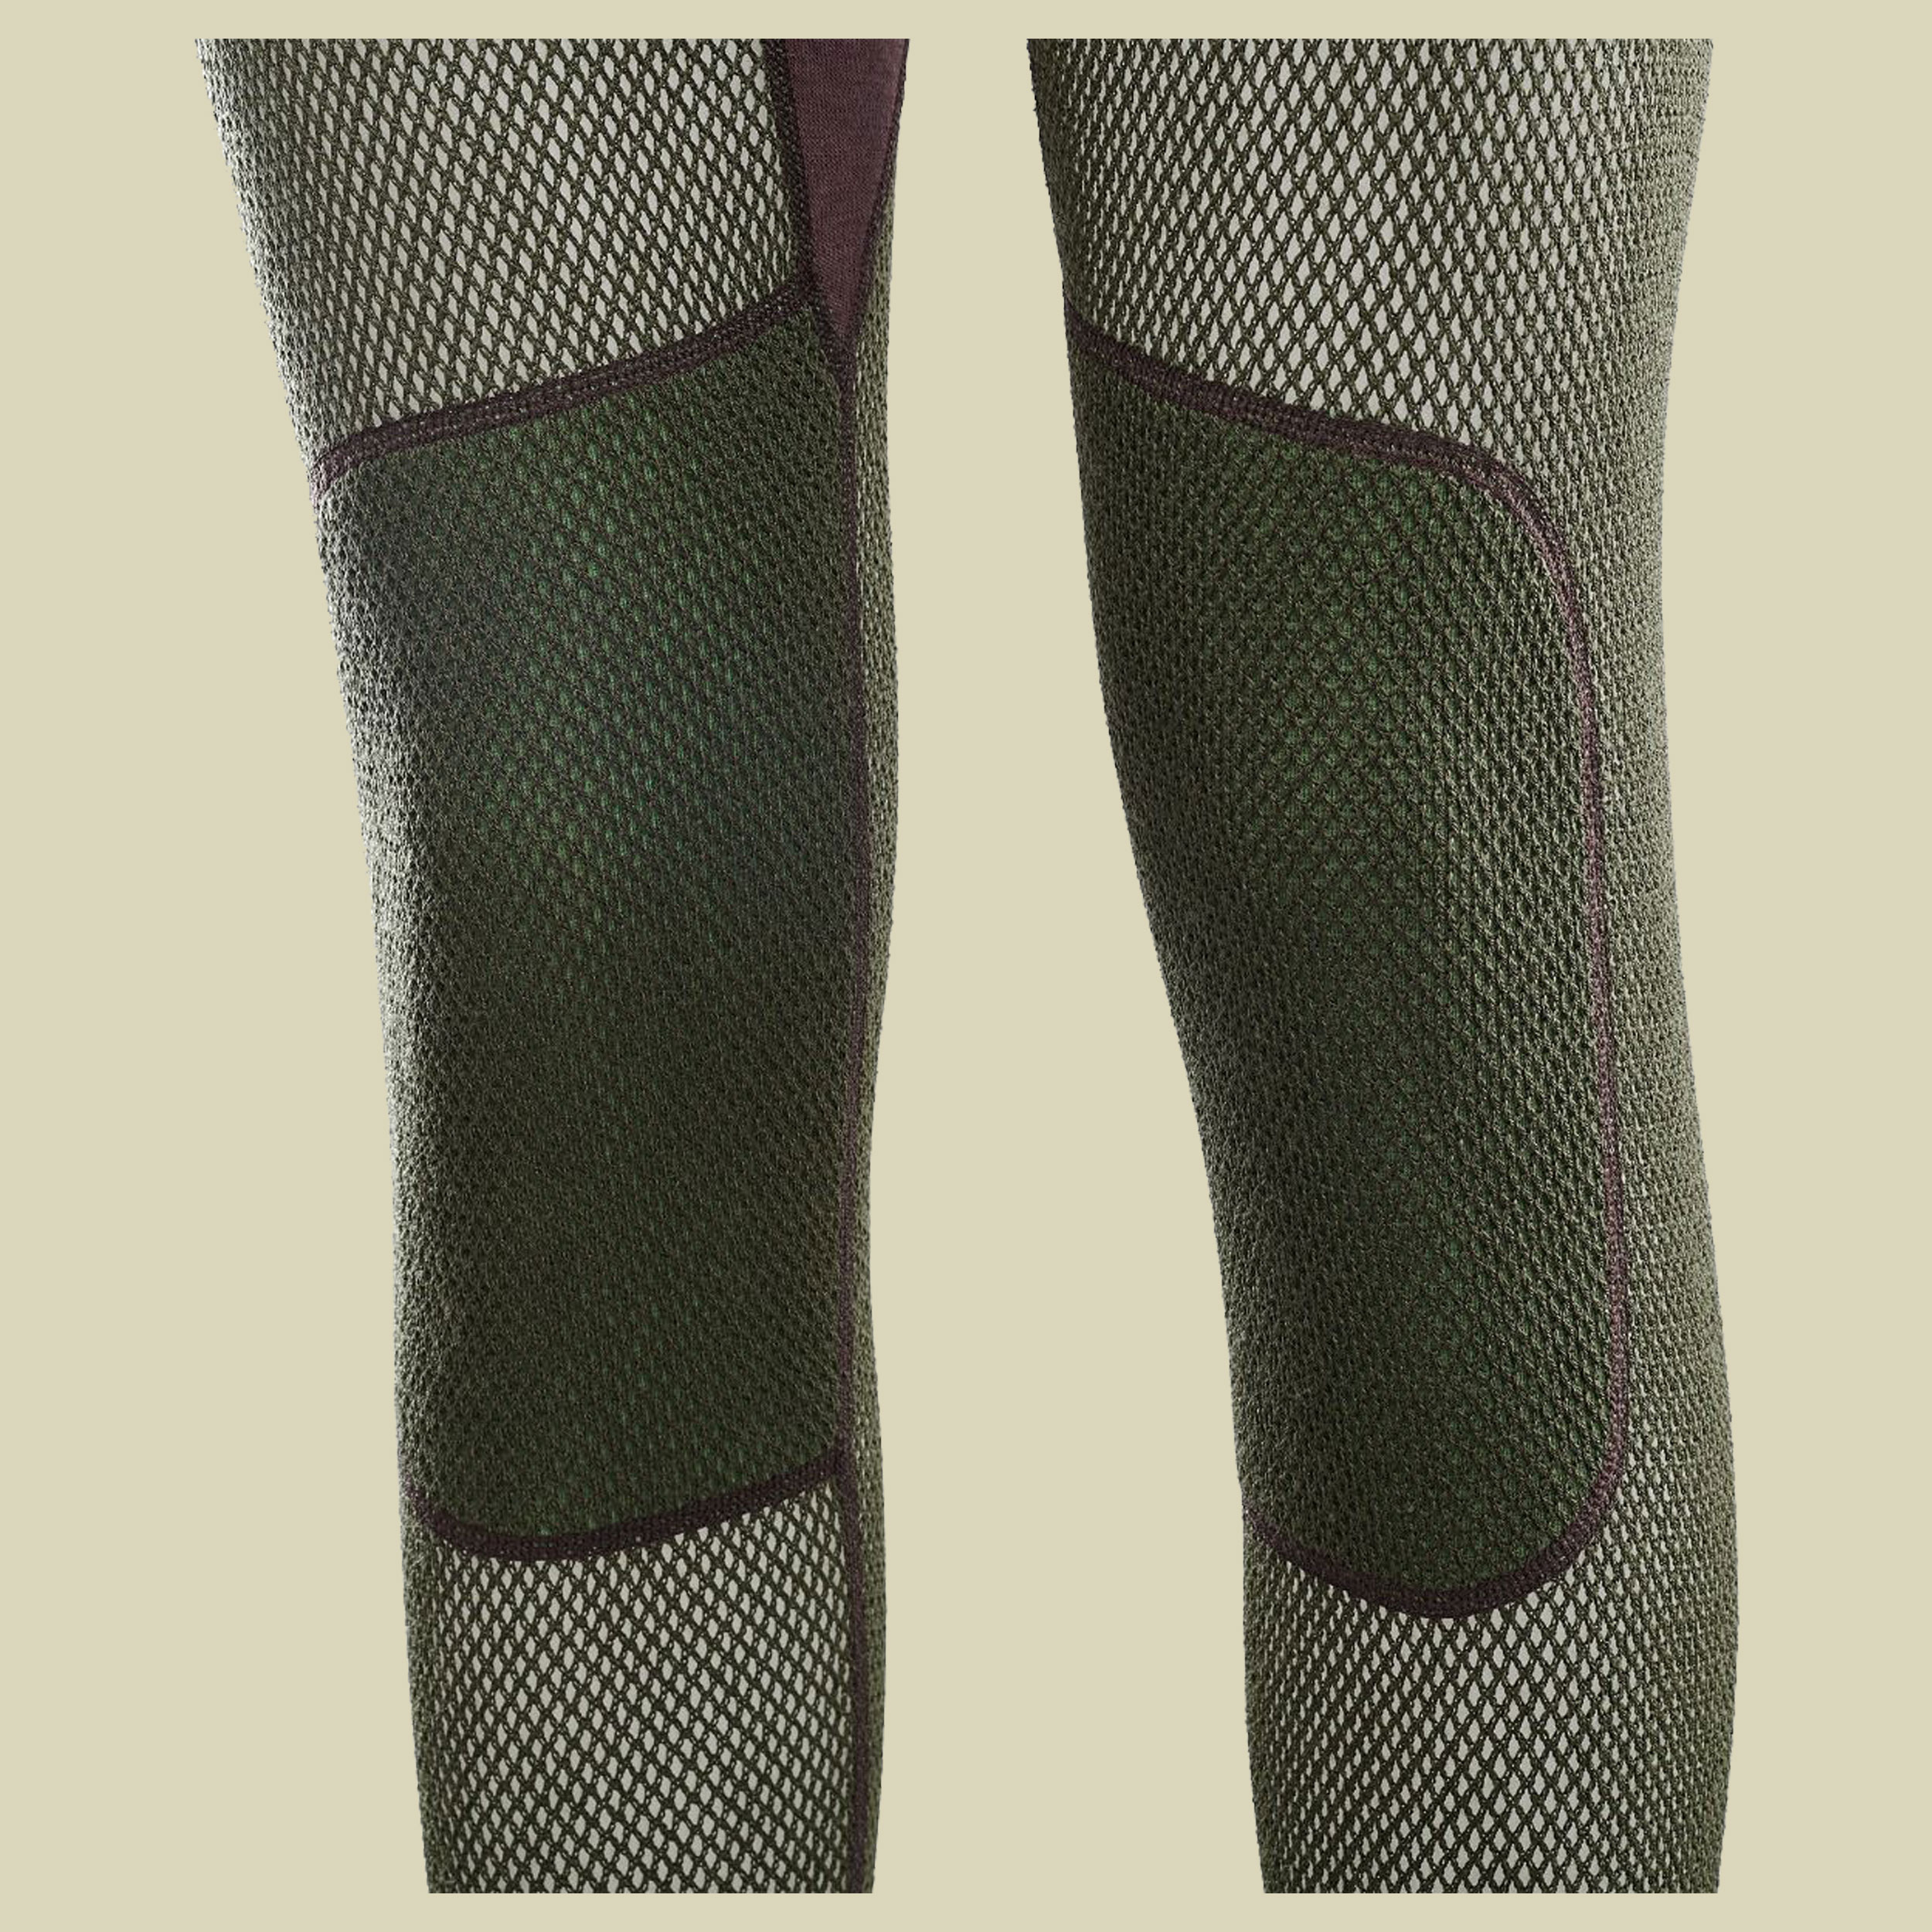 Woolnet Hybrid Long Pants Women Größe L  Farbe fudge / dill / olive night